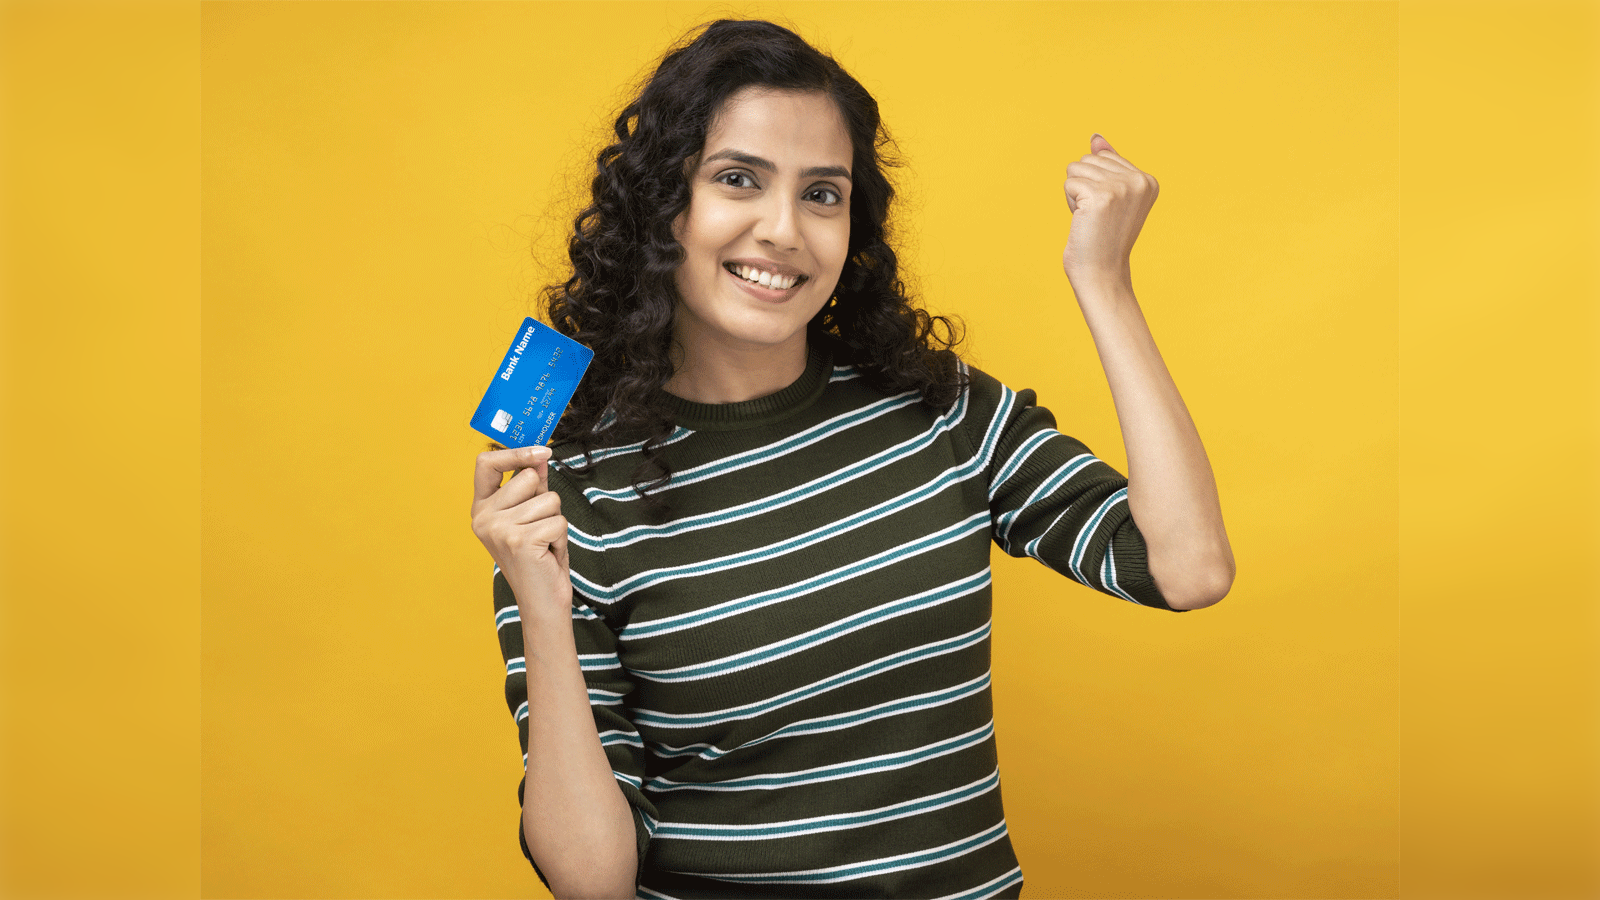 cashback credit card: Top cashback credit cards for shopping, ordering on  , Flipkart, Myntra, Swiggy - The Economic Times